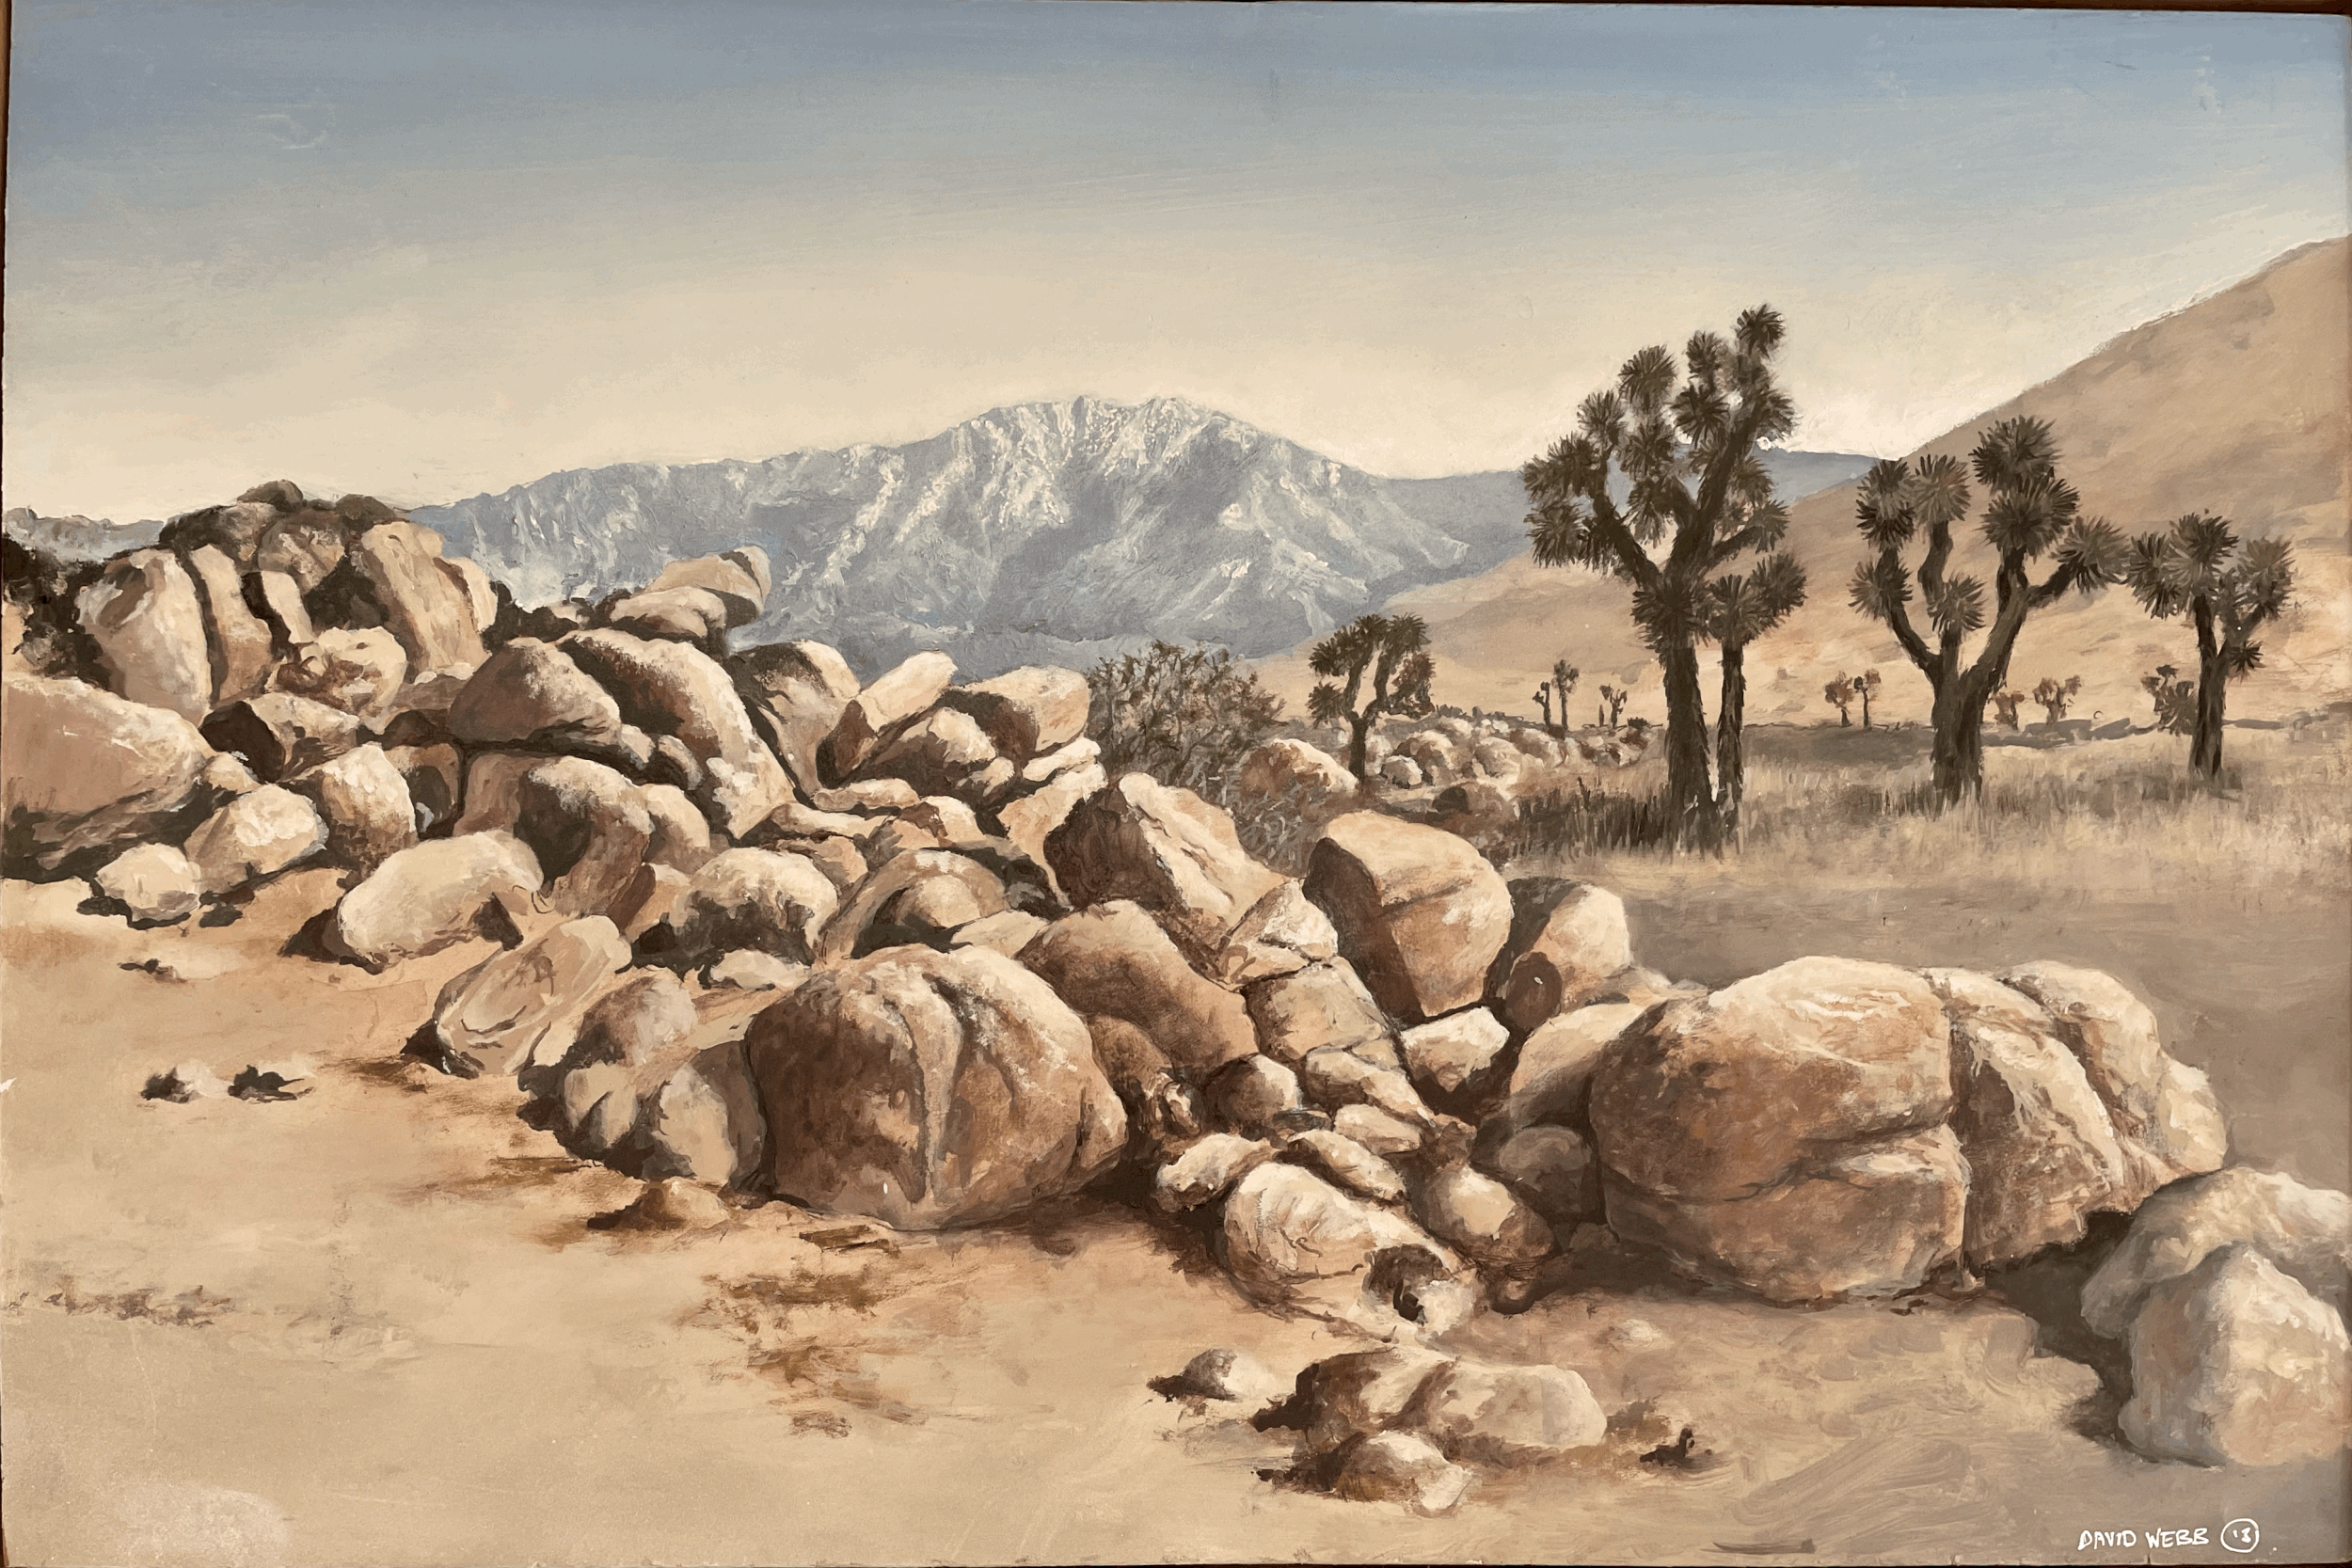 Mt San Jacinto from the high desert.